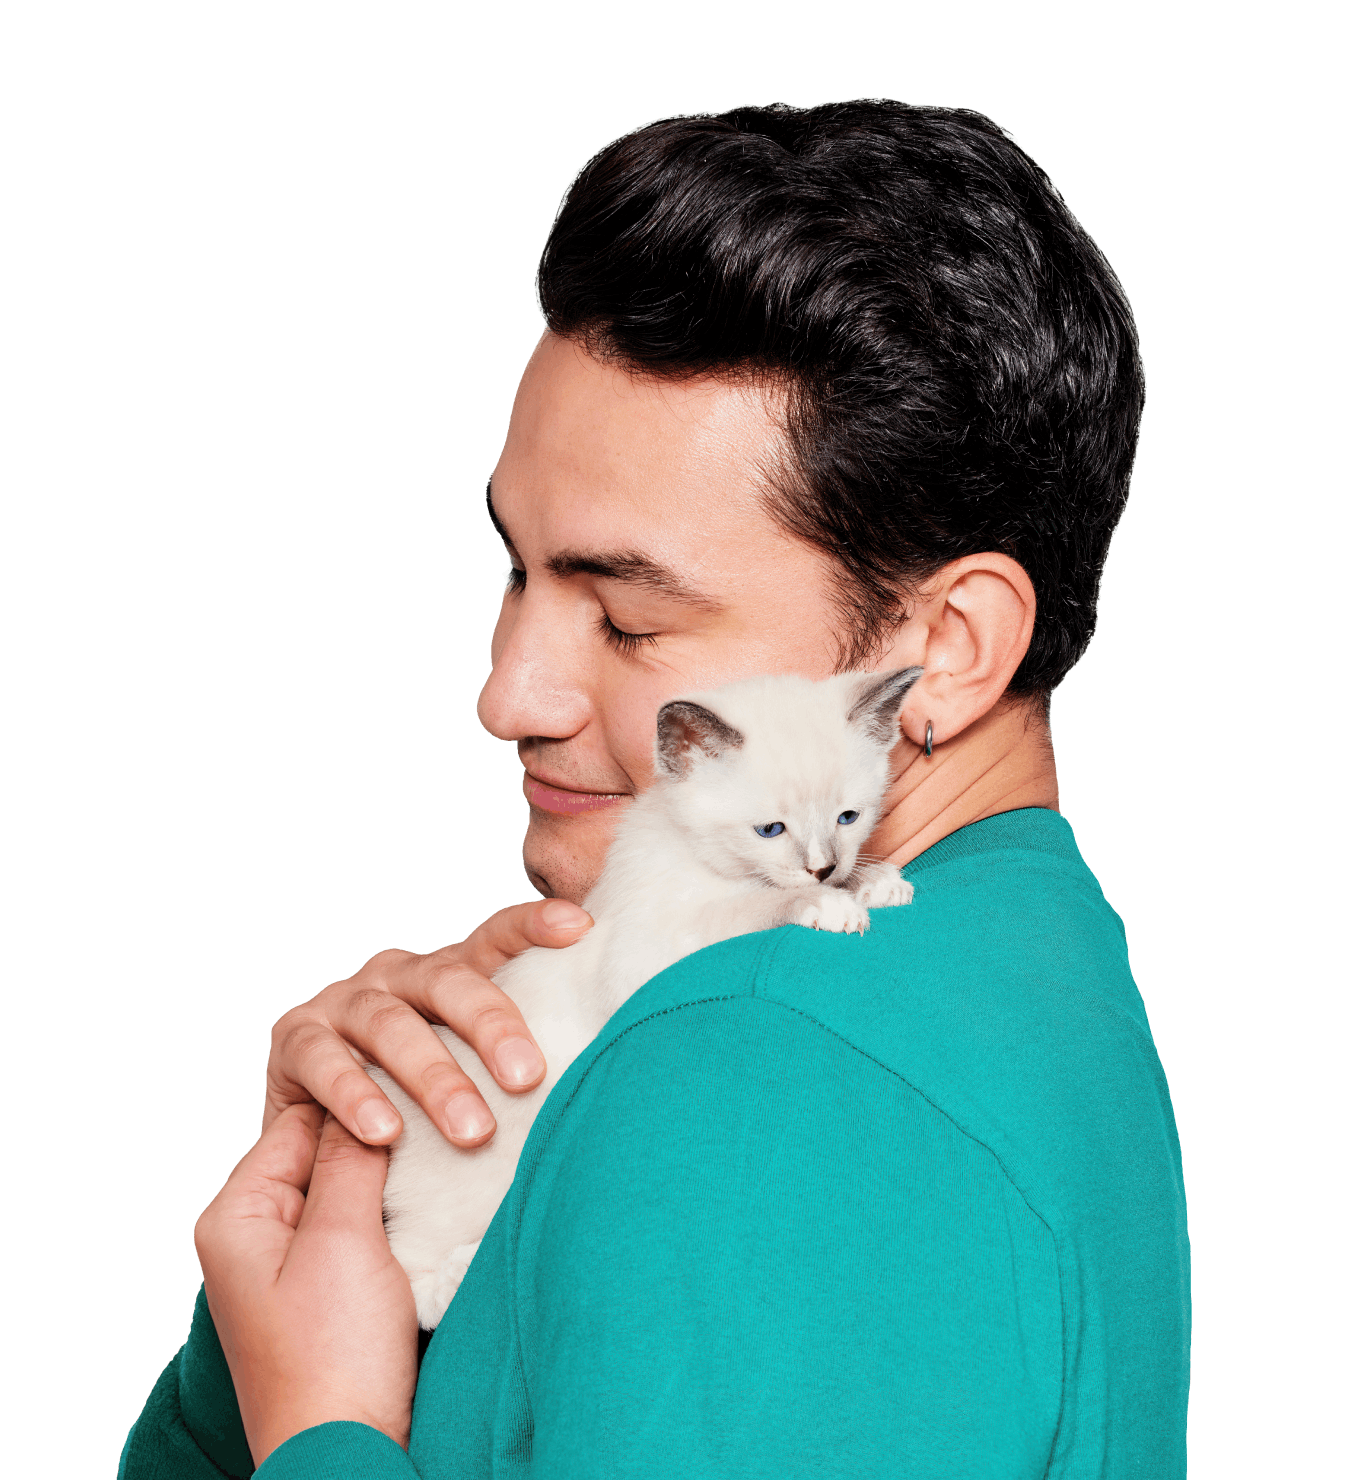 A man cuddling a small white kitten